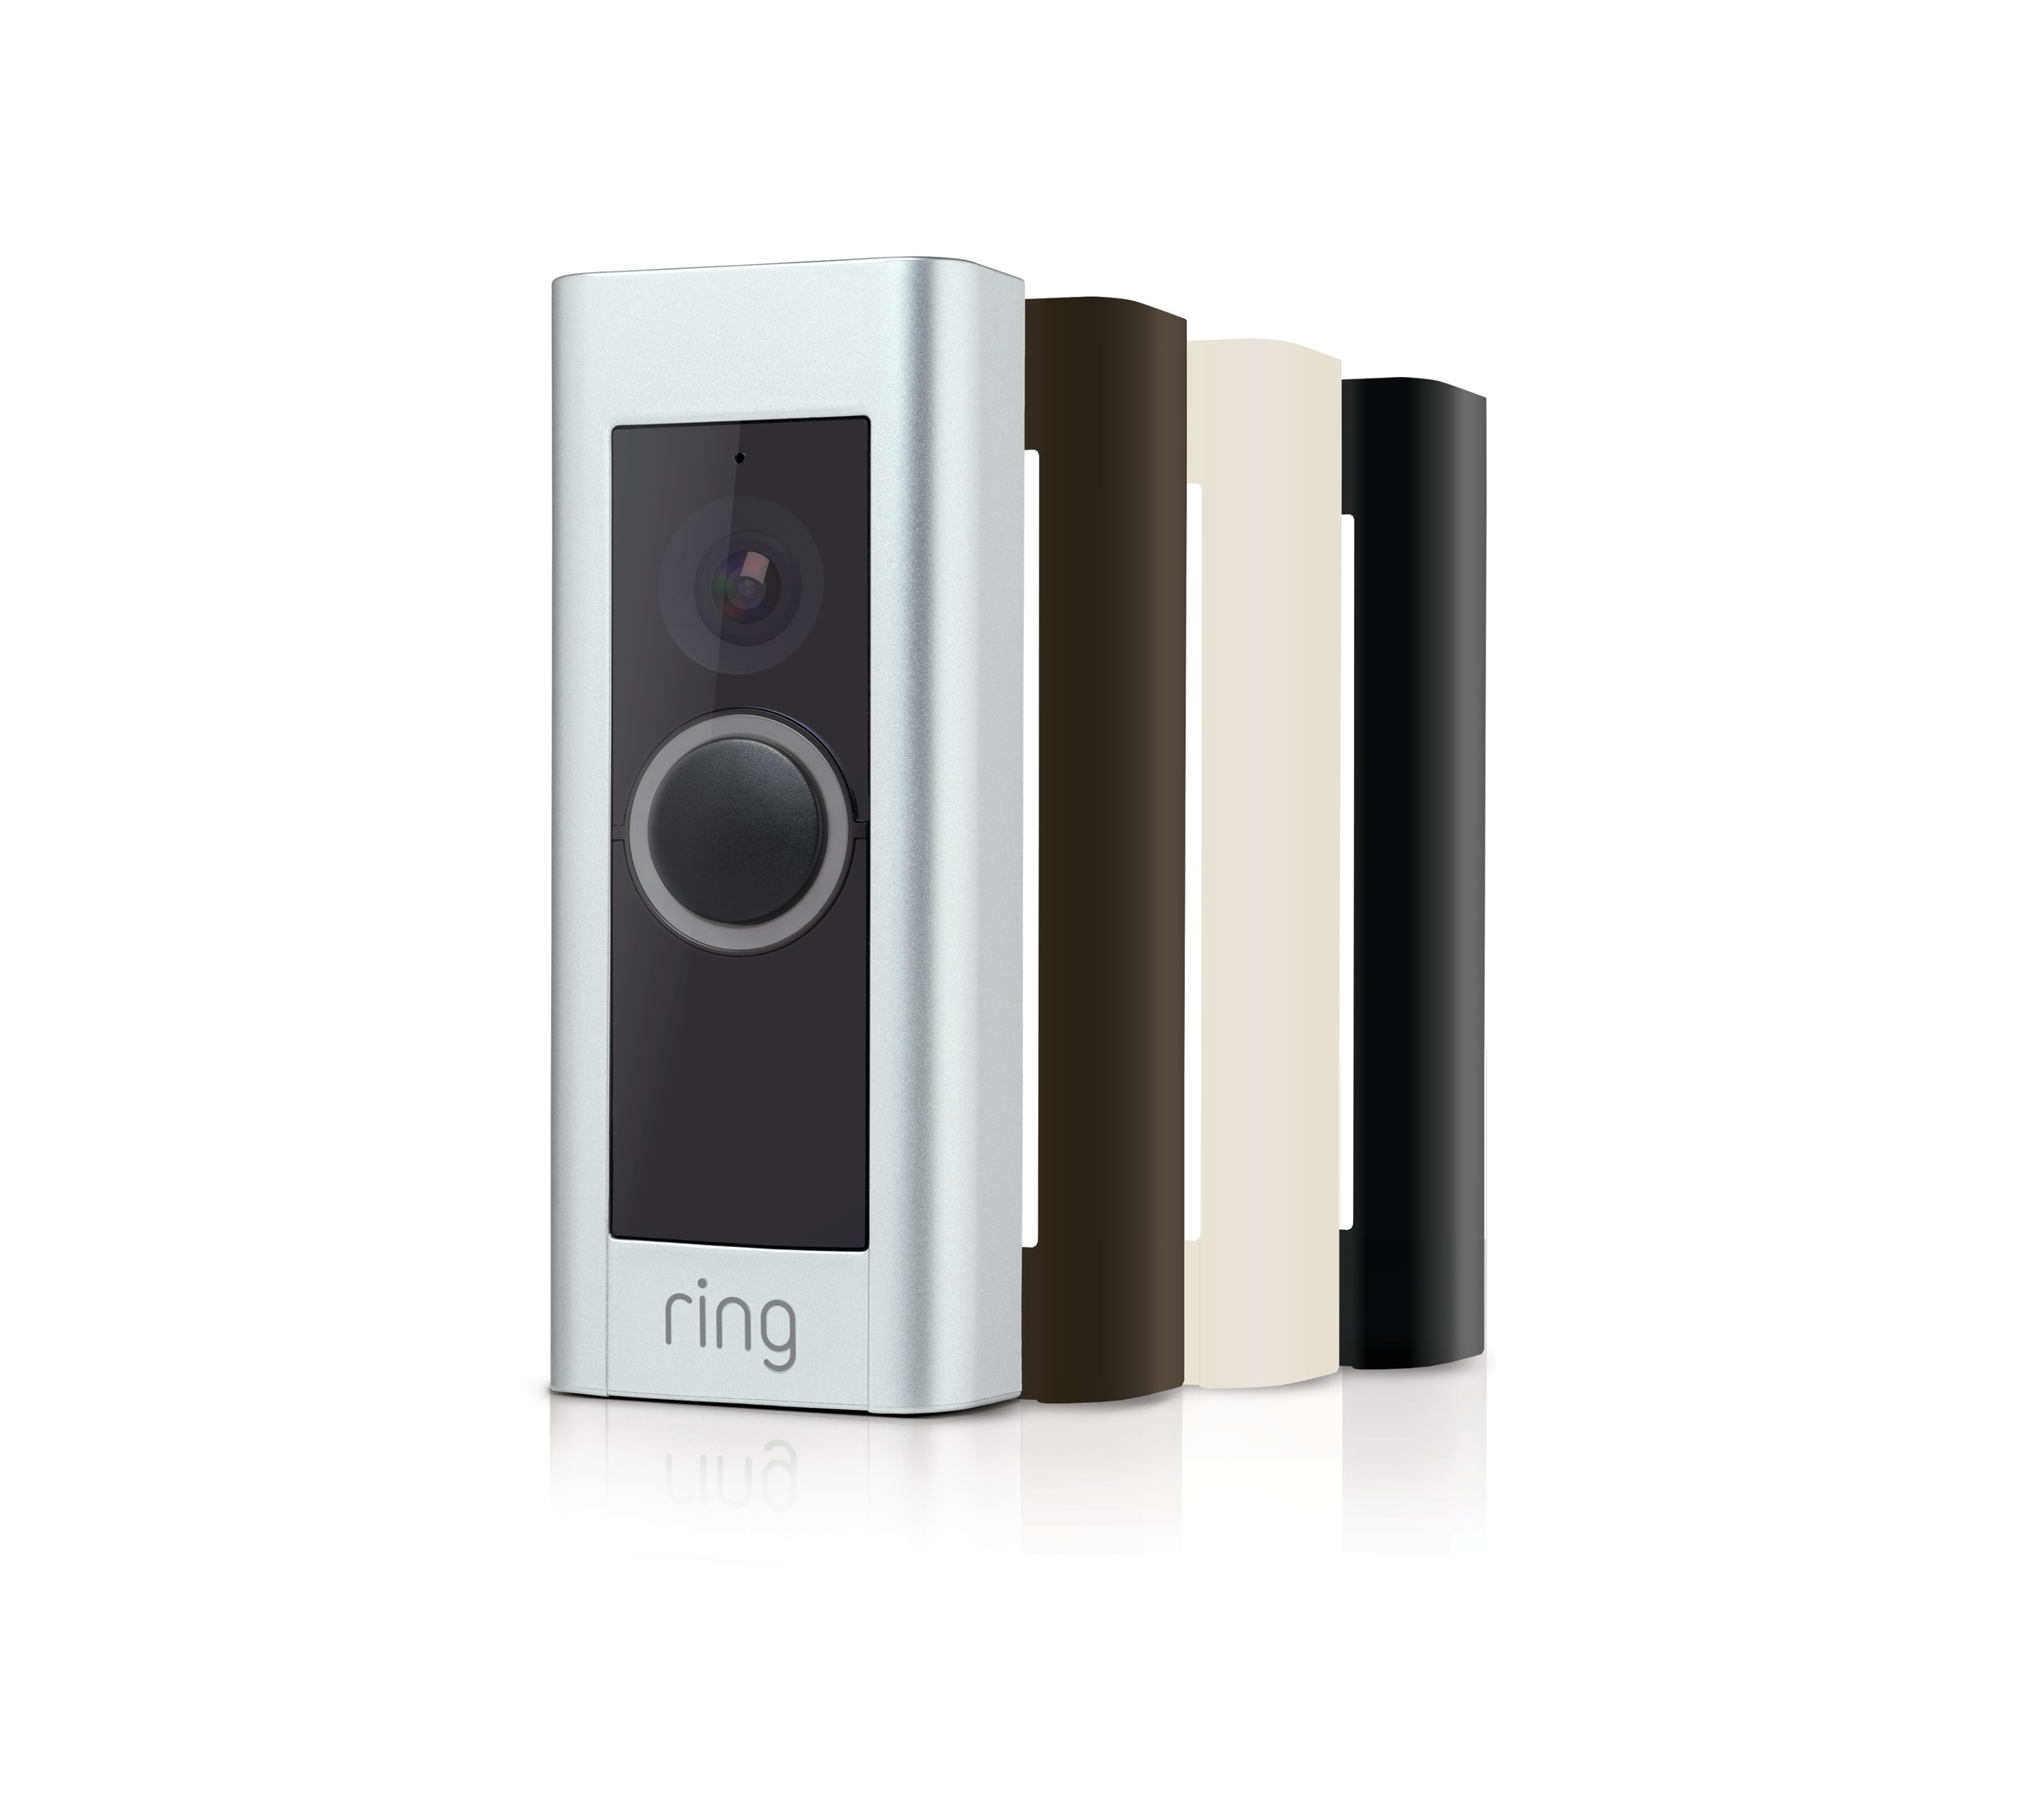 Ring Video Doorbell Pro - Smart Wired WiFi Doorbell Camera with